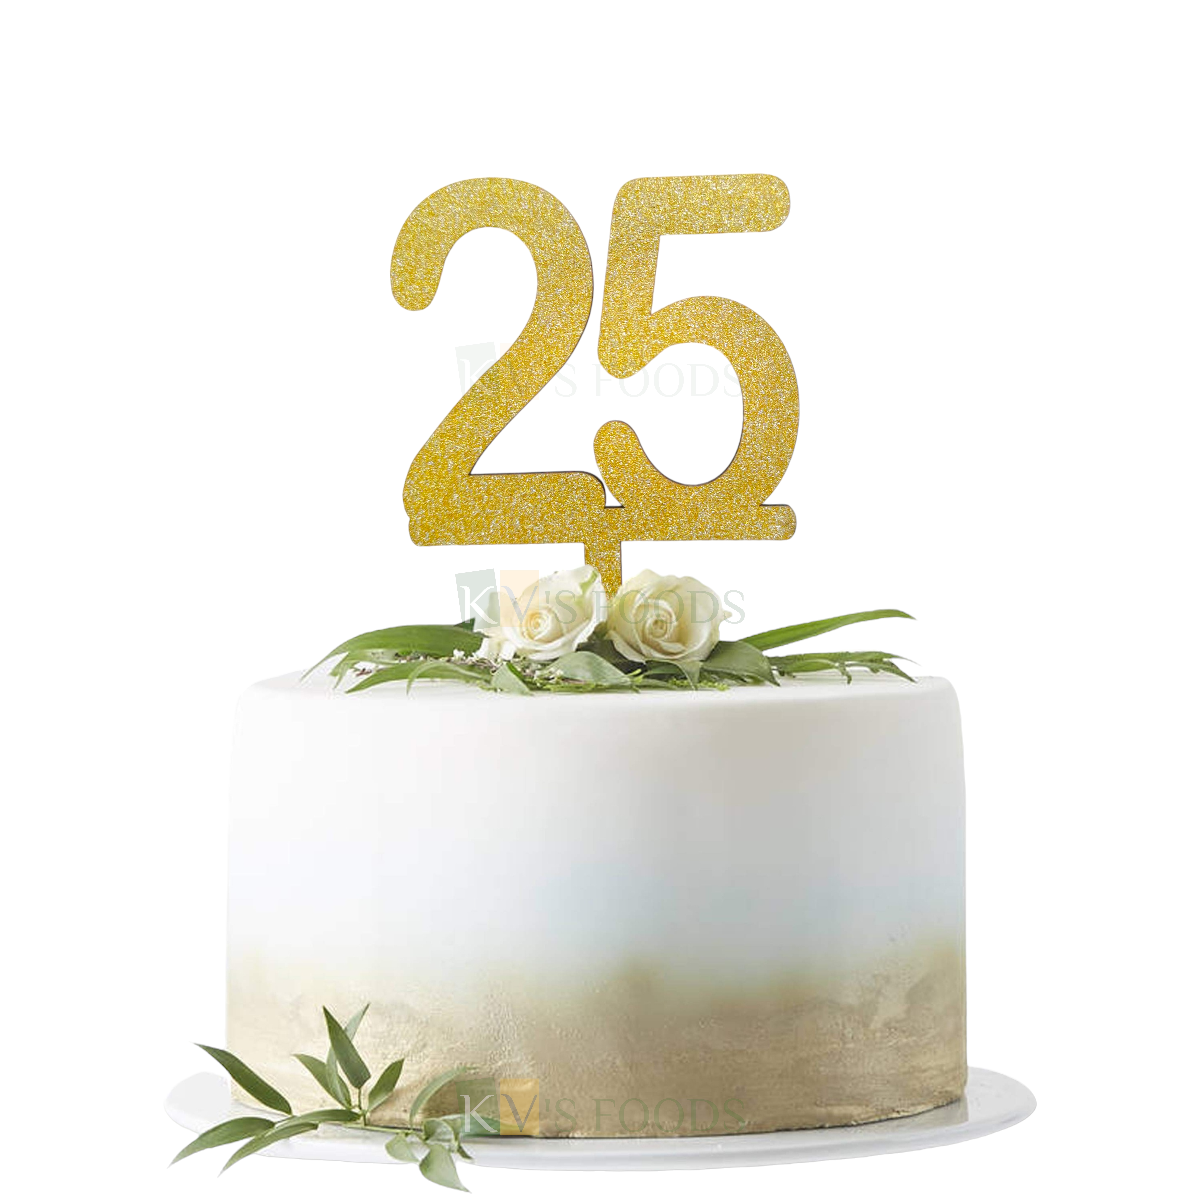 1PC Golden Shiny Glitter MDF 25 Number Cake Topper, Happy Birthday Theme, Anniversary Theme, Twenty Five Number Theme Cake and Cupcake Glitter Insert DIY cake Decorations